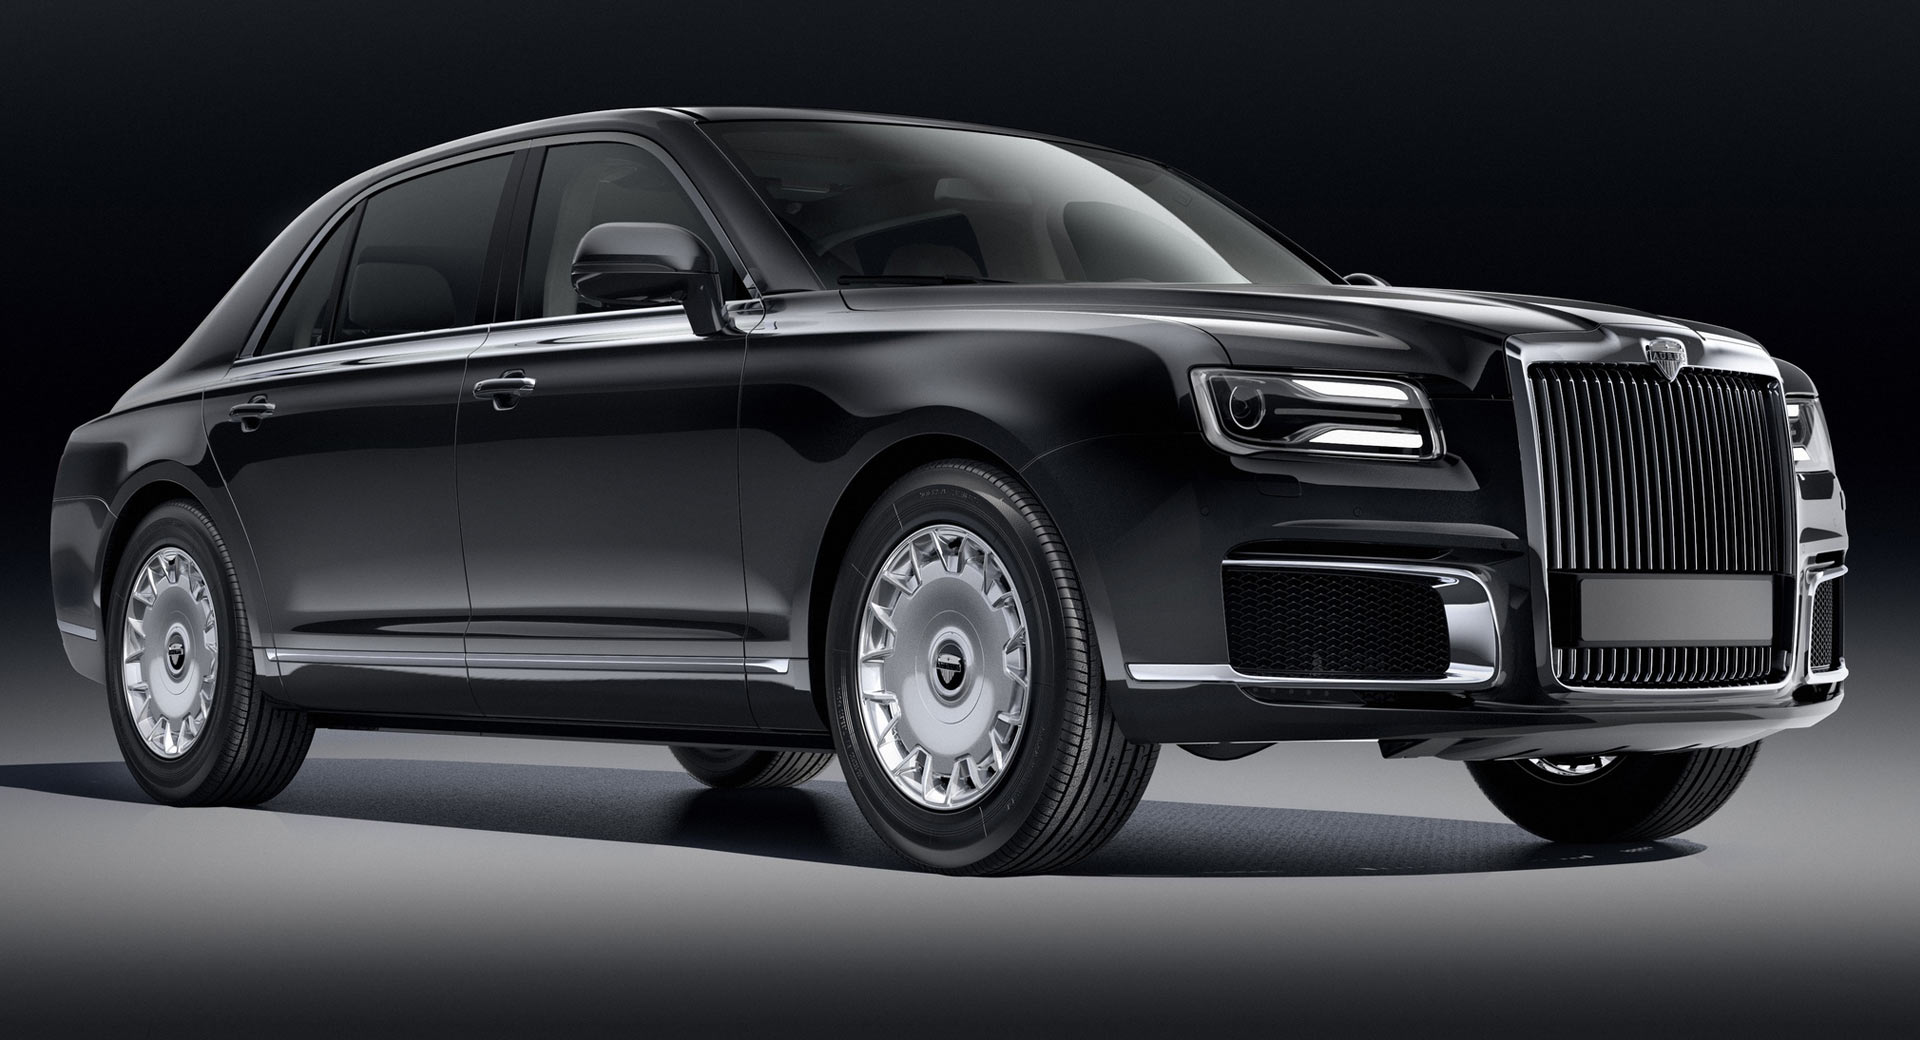 Aurus Senat Is Russia's Answer To The Rolls-Royce Phantom